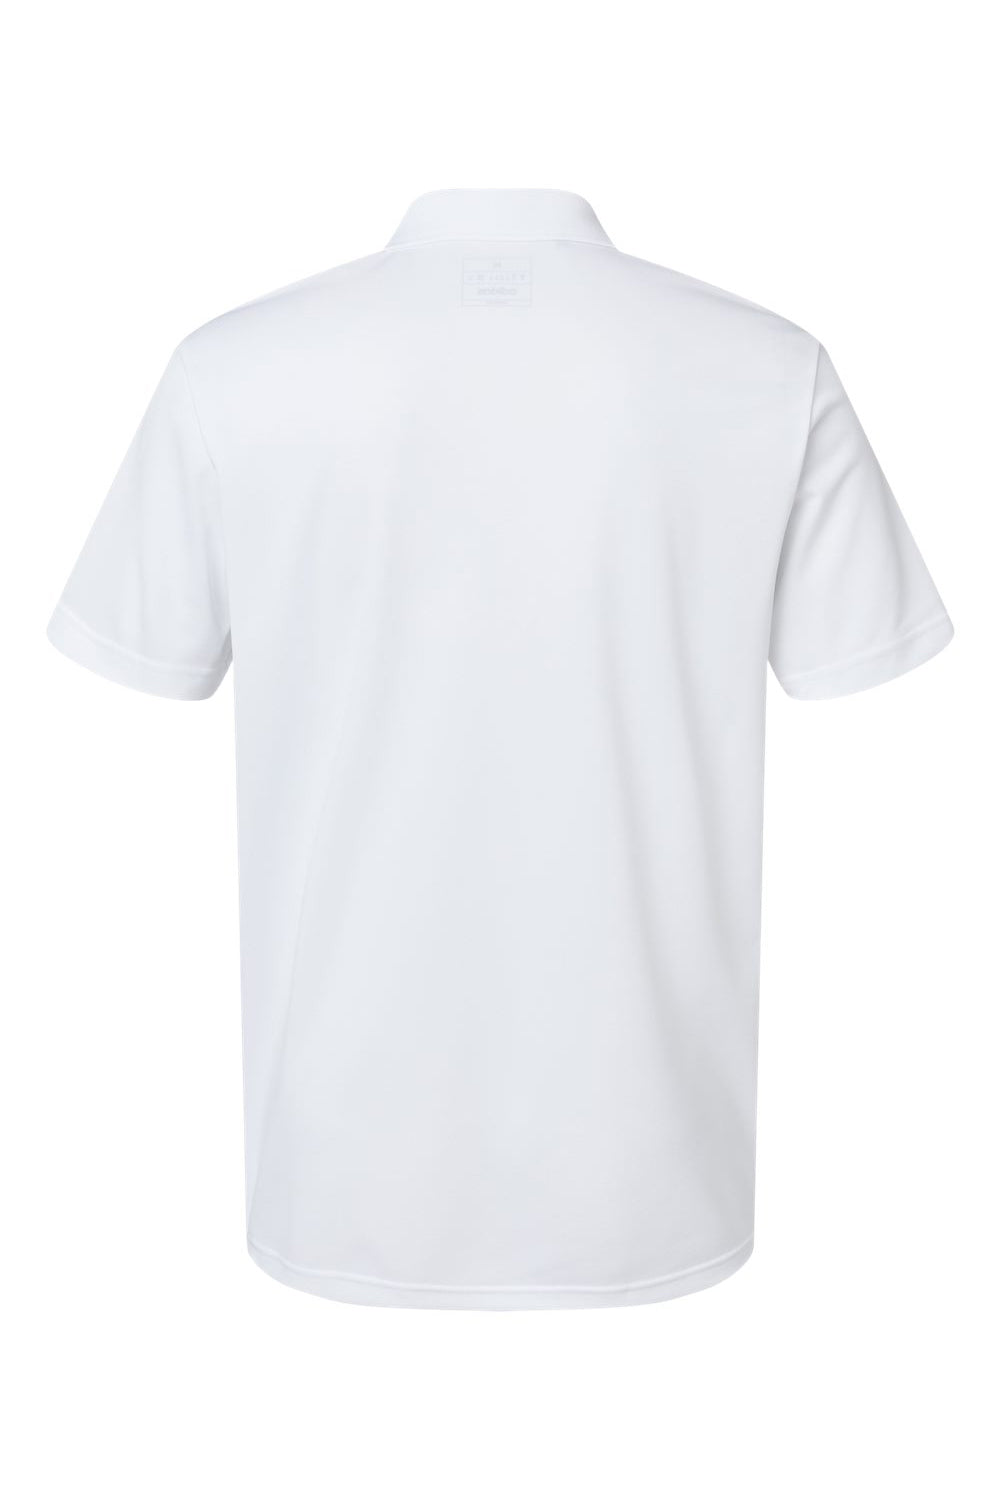 Adidas A430 Mens Basic Short Sleeve Polo Shirt White Flat Back